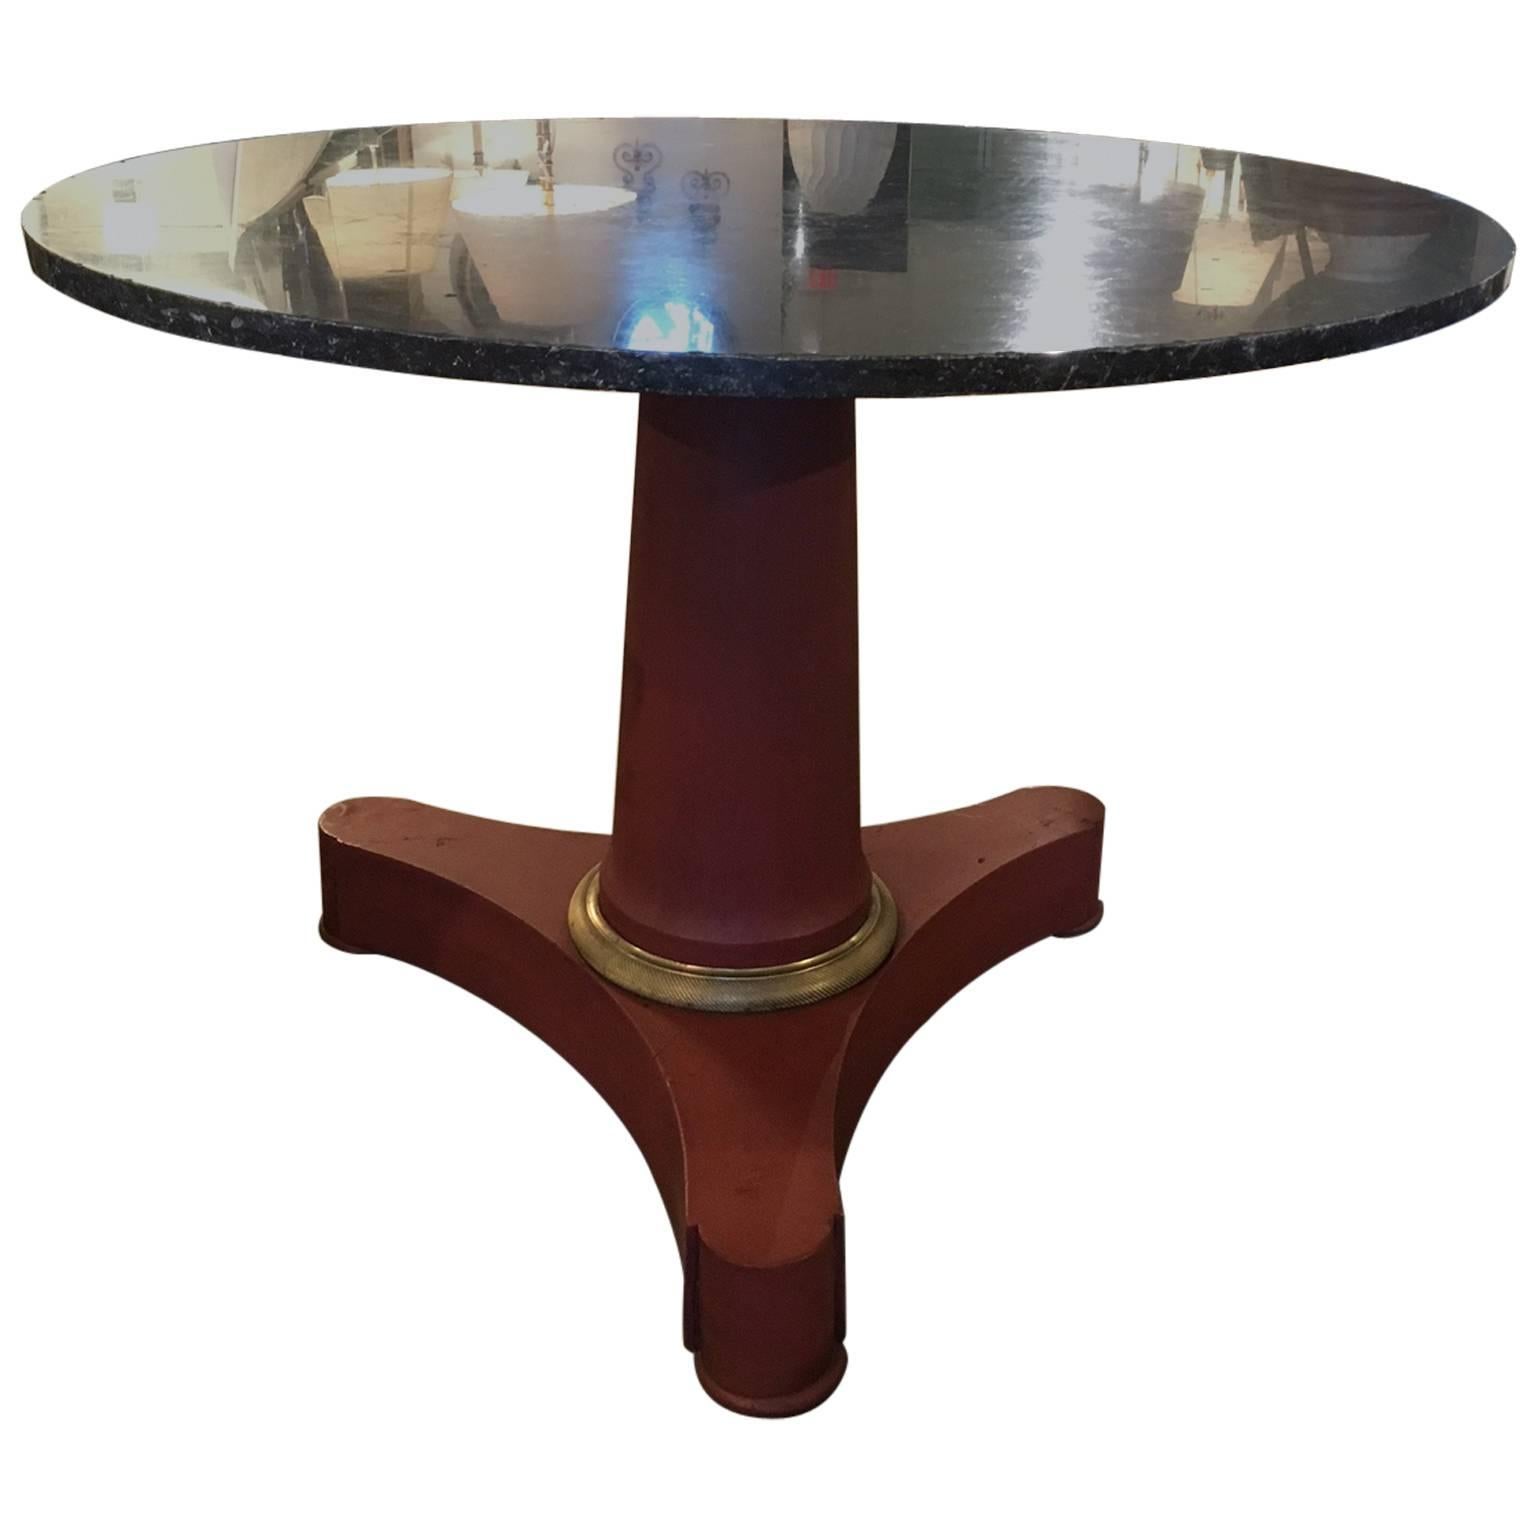 1st Quarter 19th Century French Empire Veneer Pedestal Table For Sale